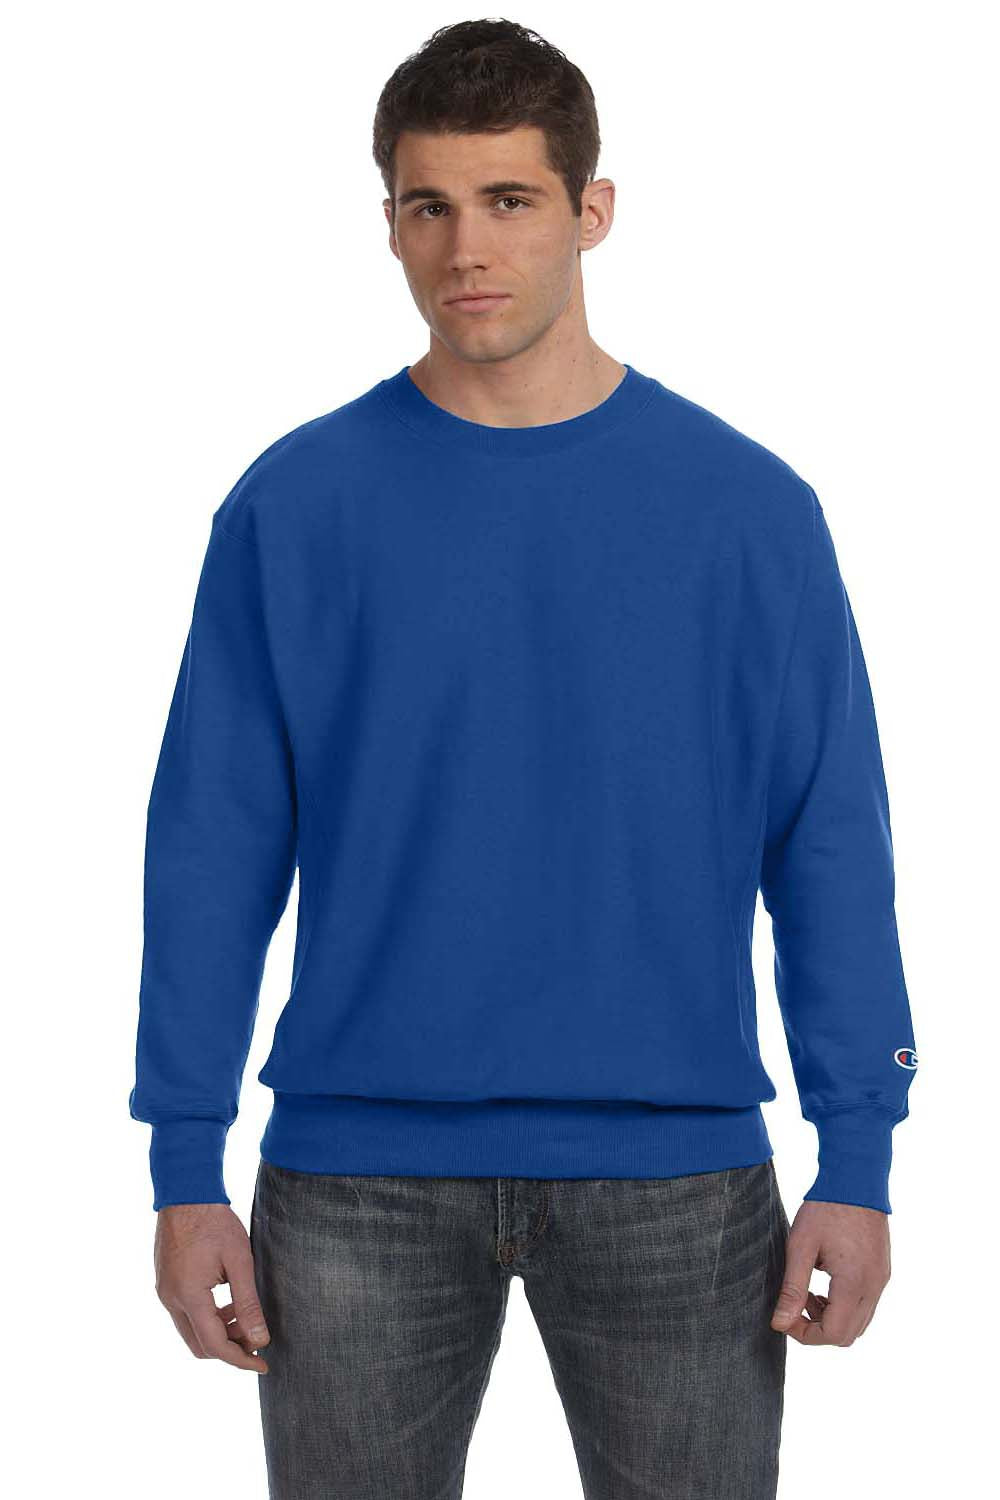 Athletic Mens S149/S1049 Royal — Sweatshirt Blue Crewneck Champion